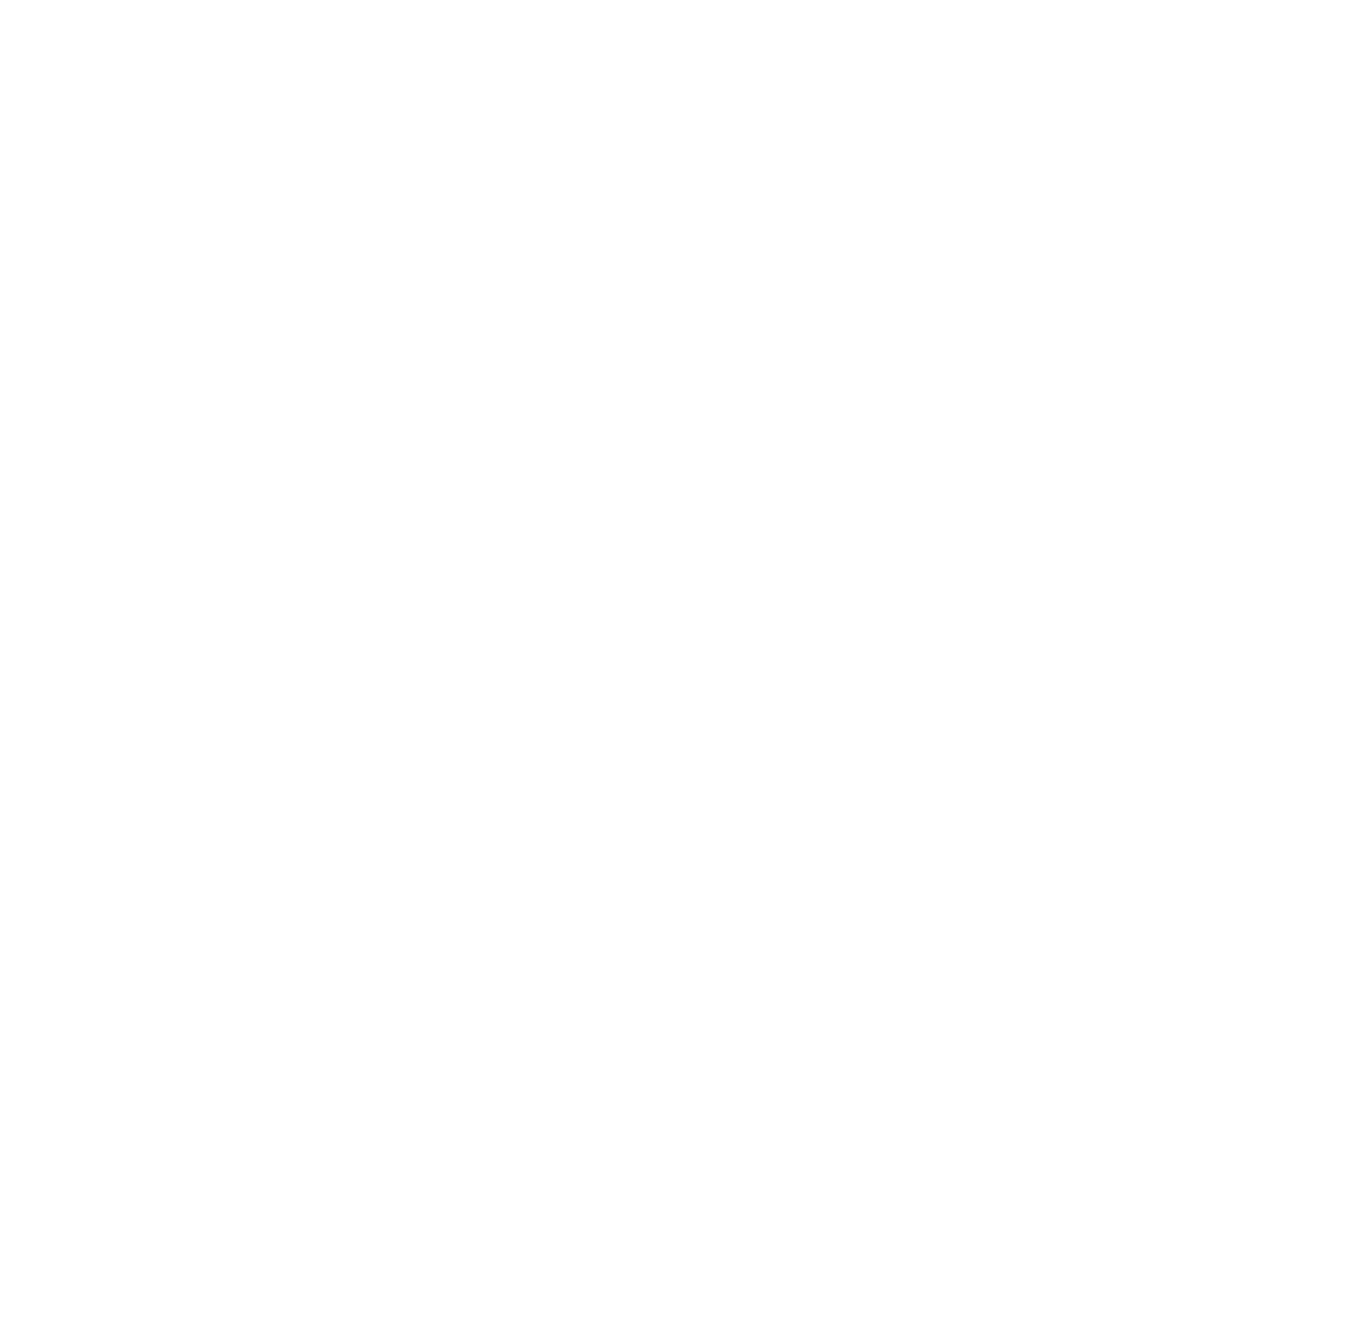 Christopher Murphy Books